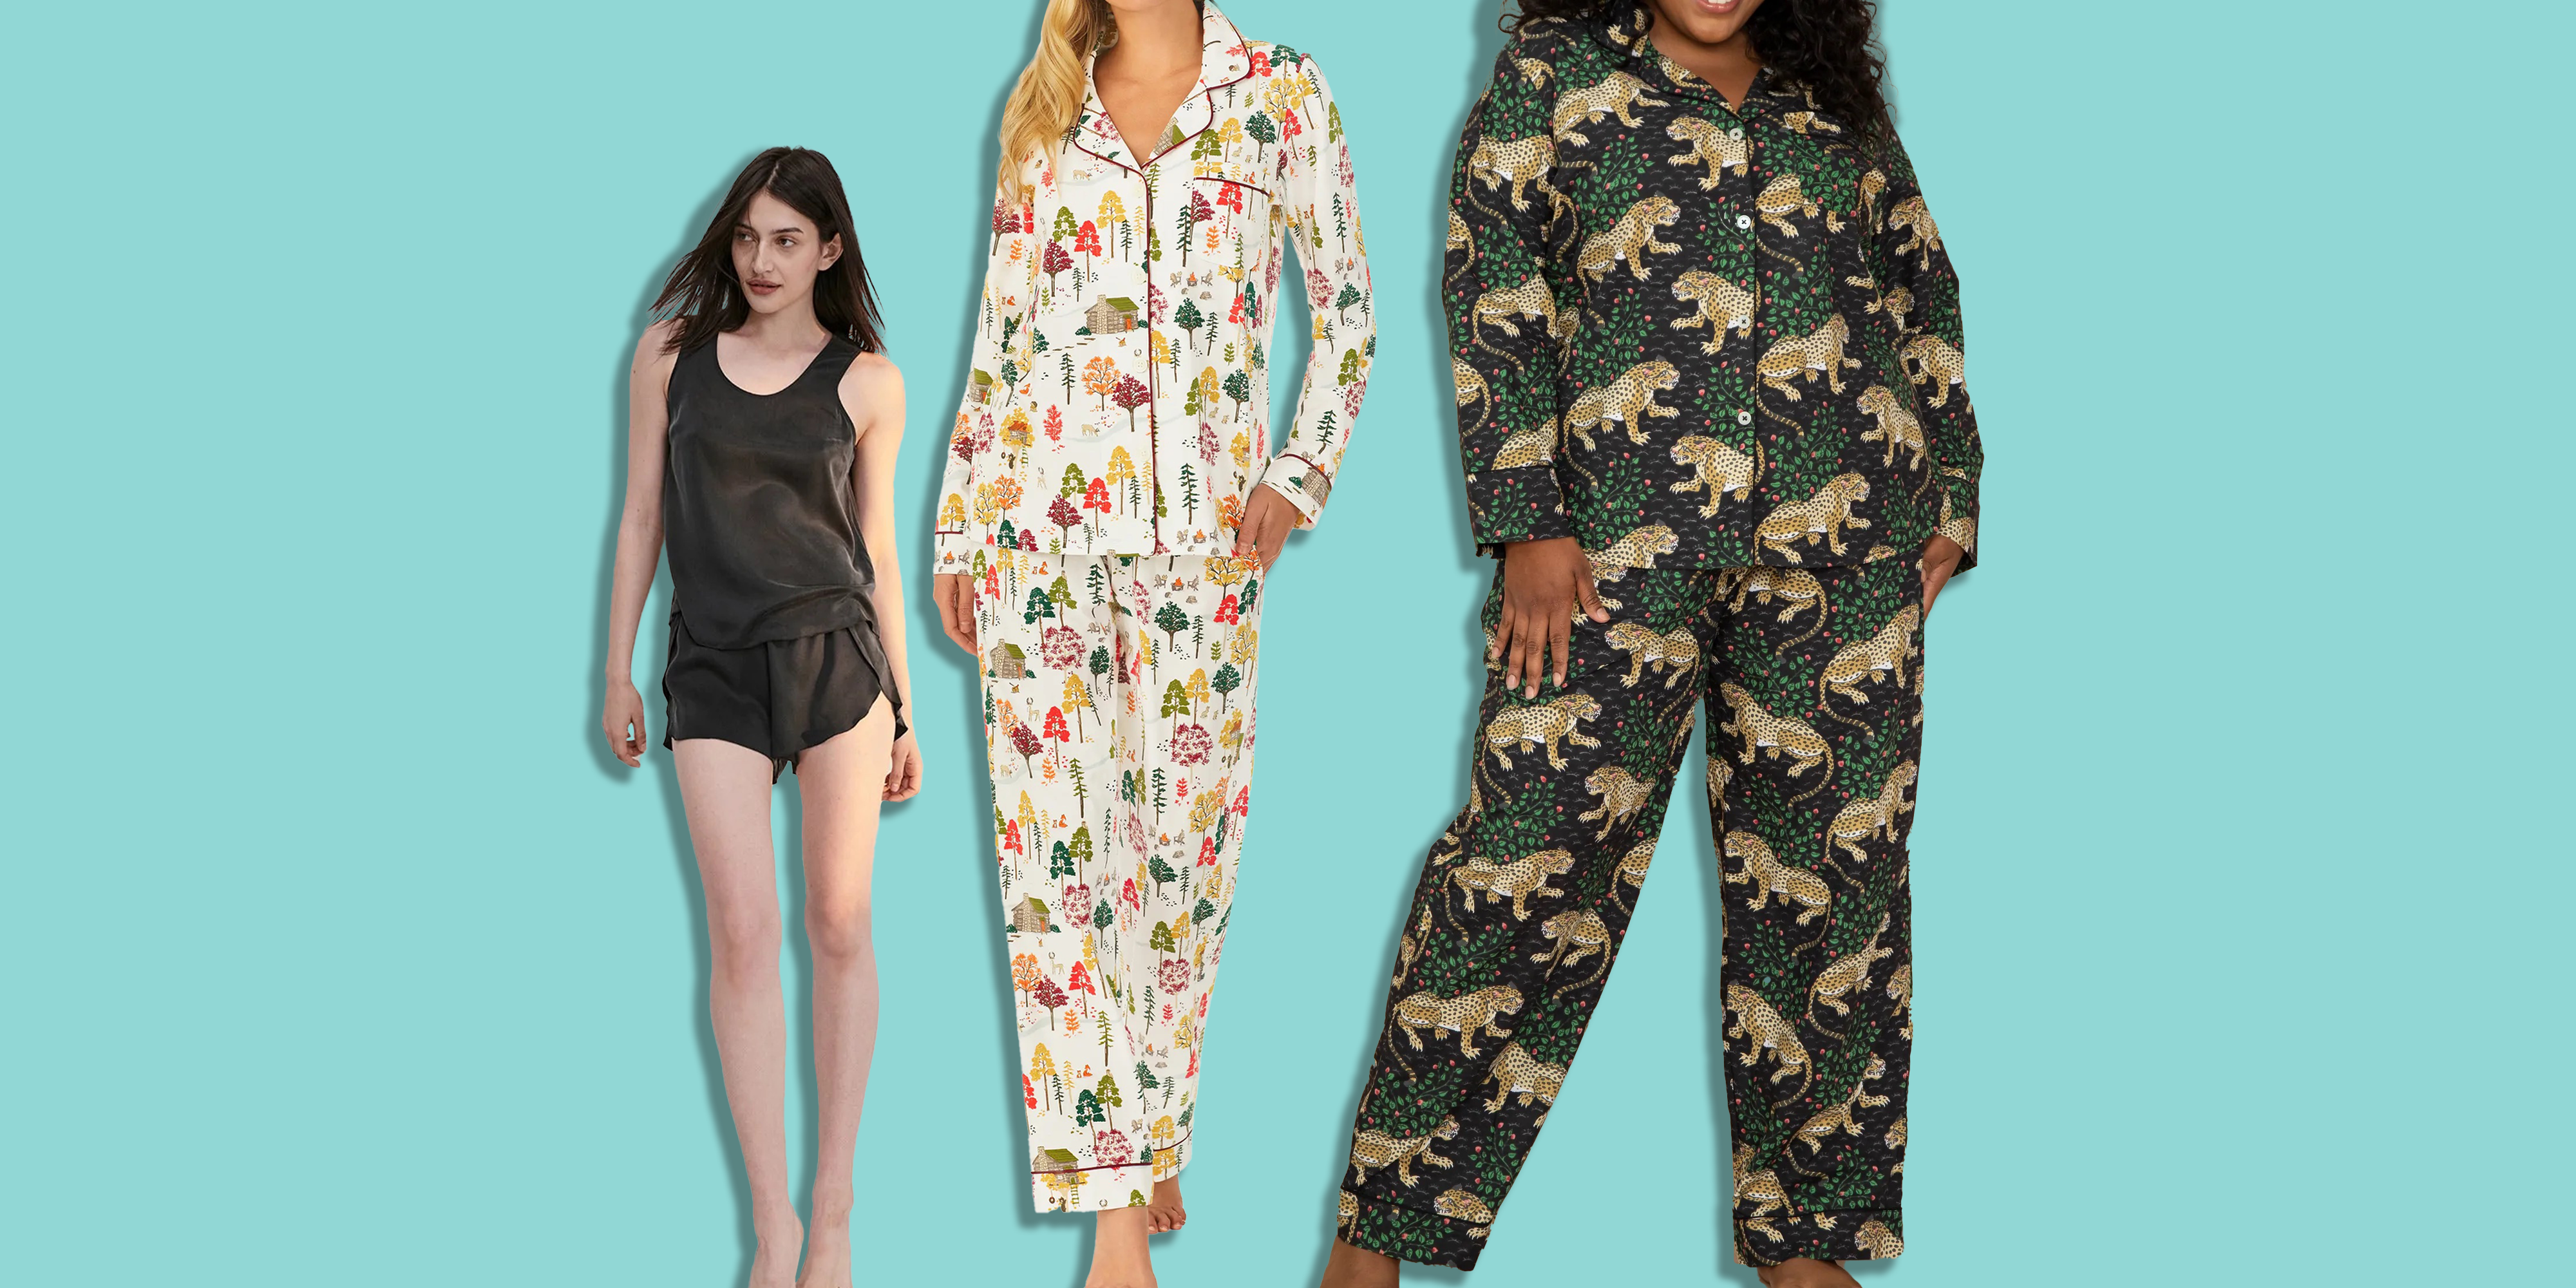 boog Laan Met pensioen gaan 19 Best Pajamas for Women 2022 - Comfortable Cozy Sleepwear